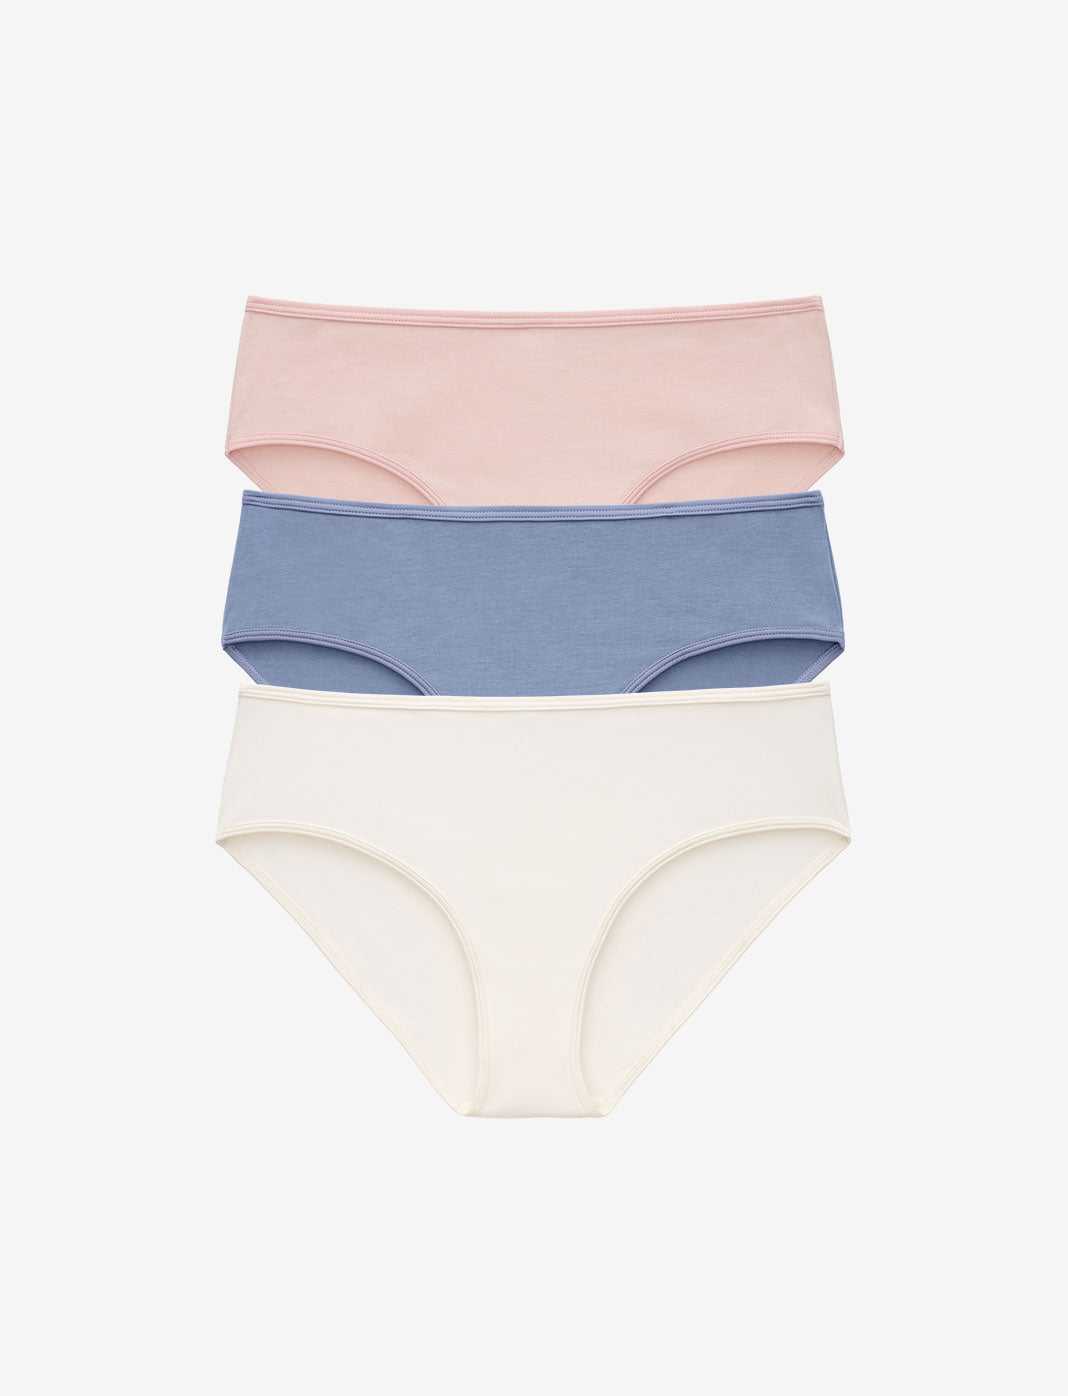 Hanes Originals Women's Underwear Seamless Rib Hi-Rise Cheeky